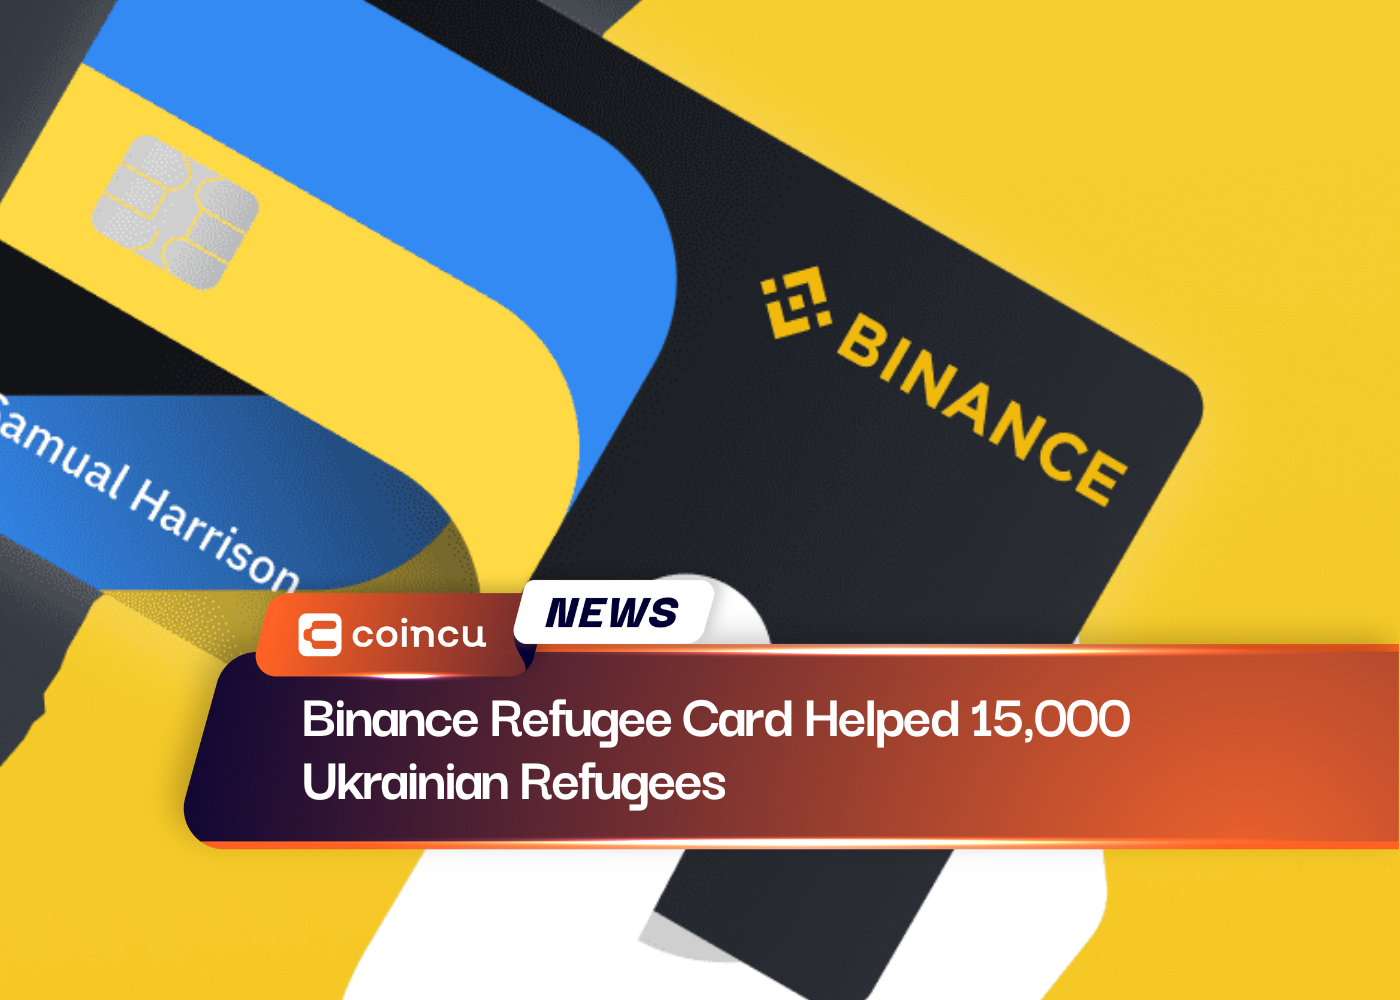 Binance Refugee Card Helped 15,000 Ukrainian Refugees